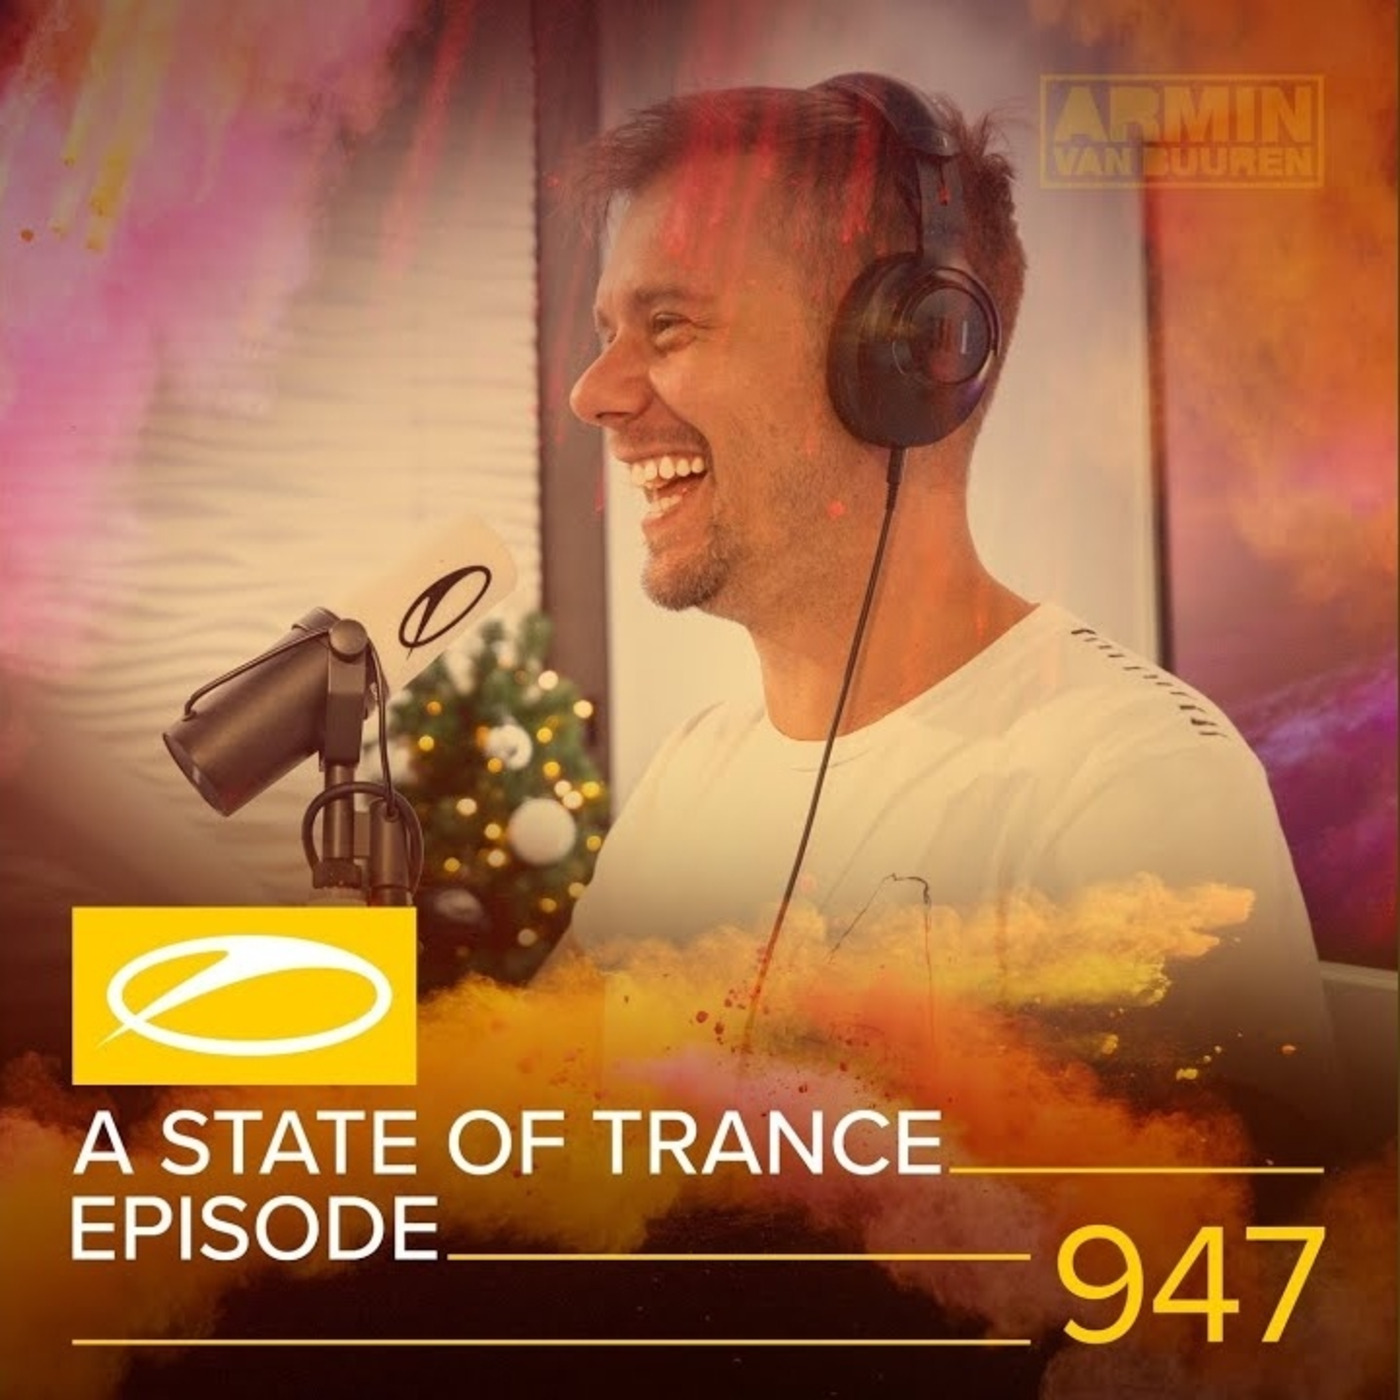 Armin van Buuren - A State of Trance 947 (02.01.2020)